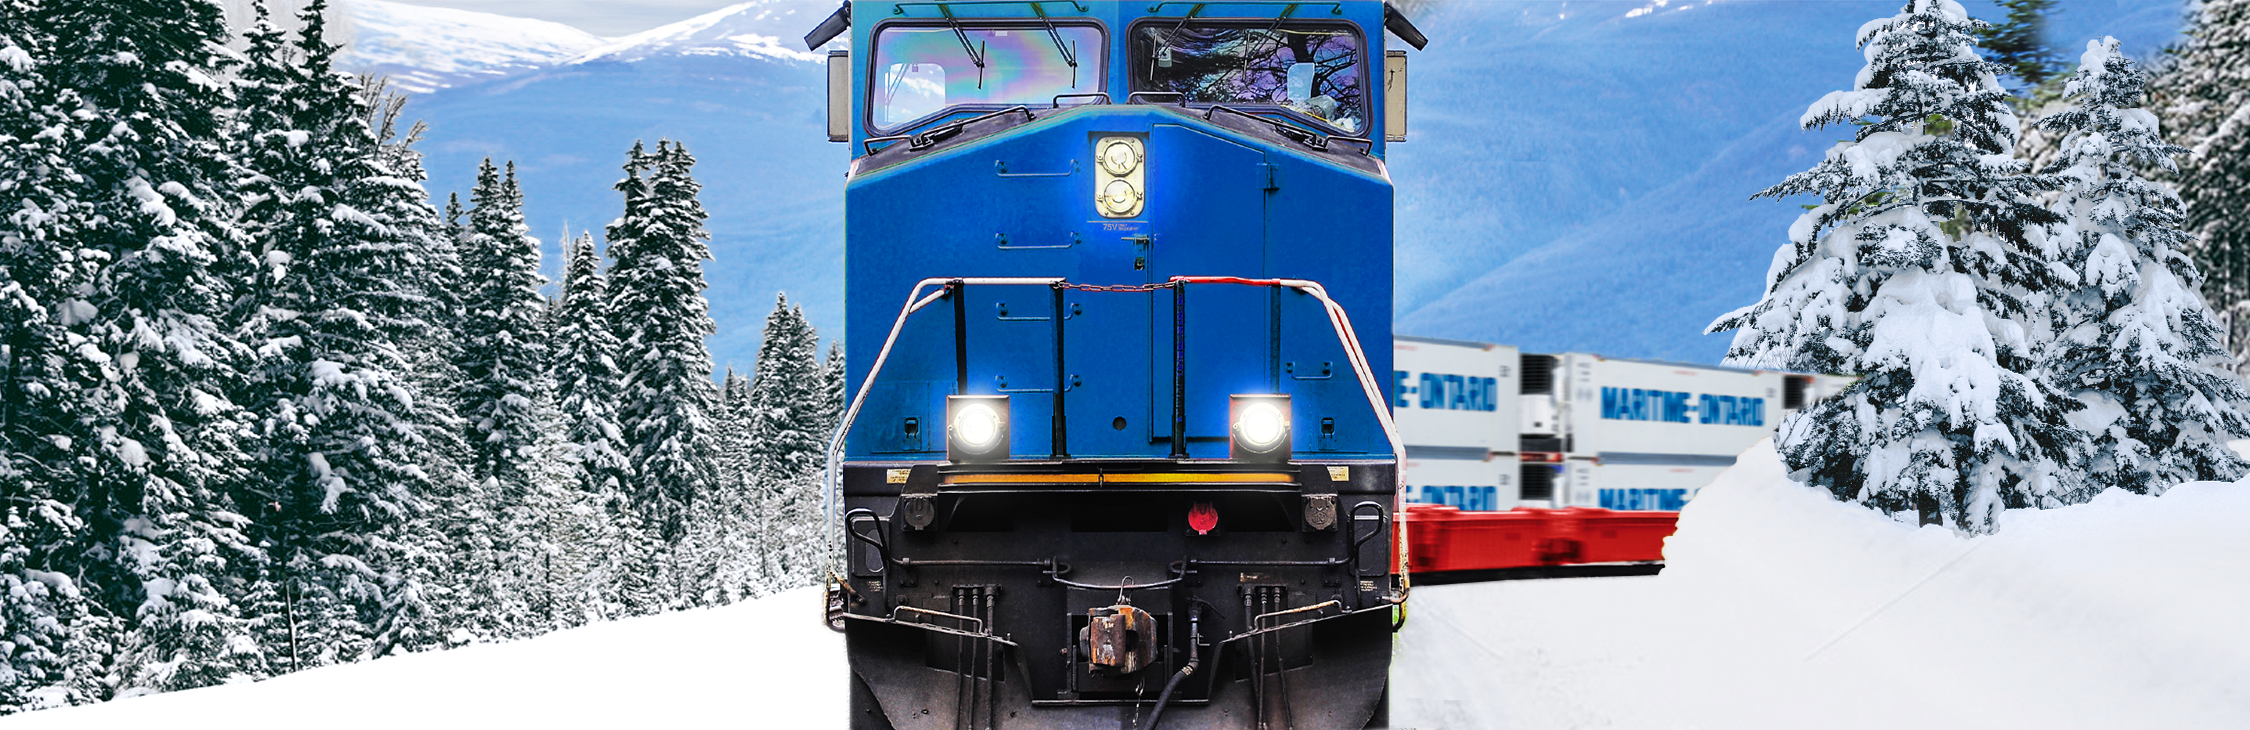 Winter on the Rail